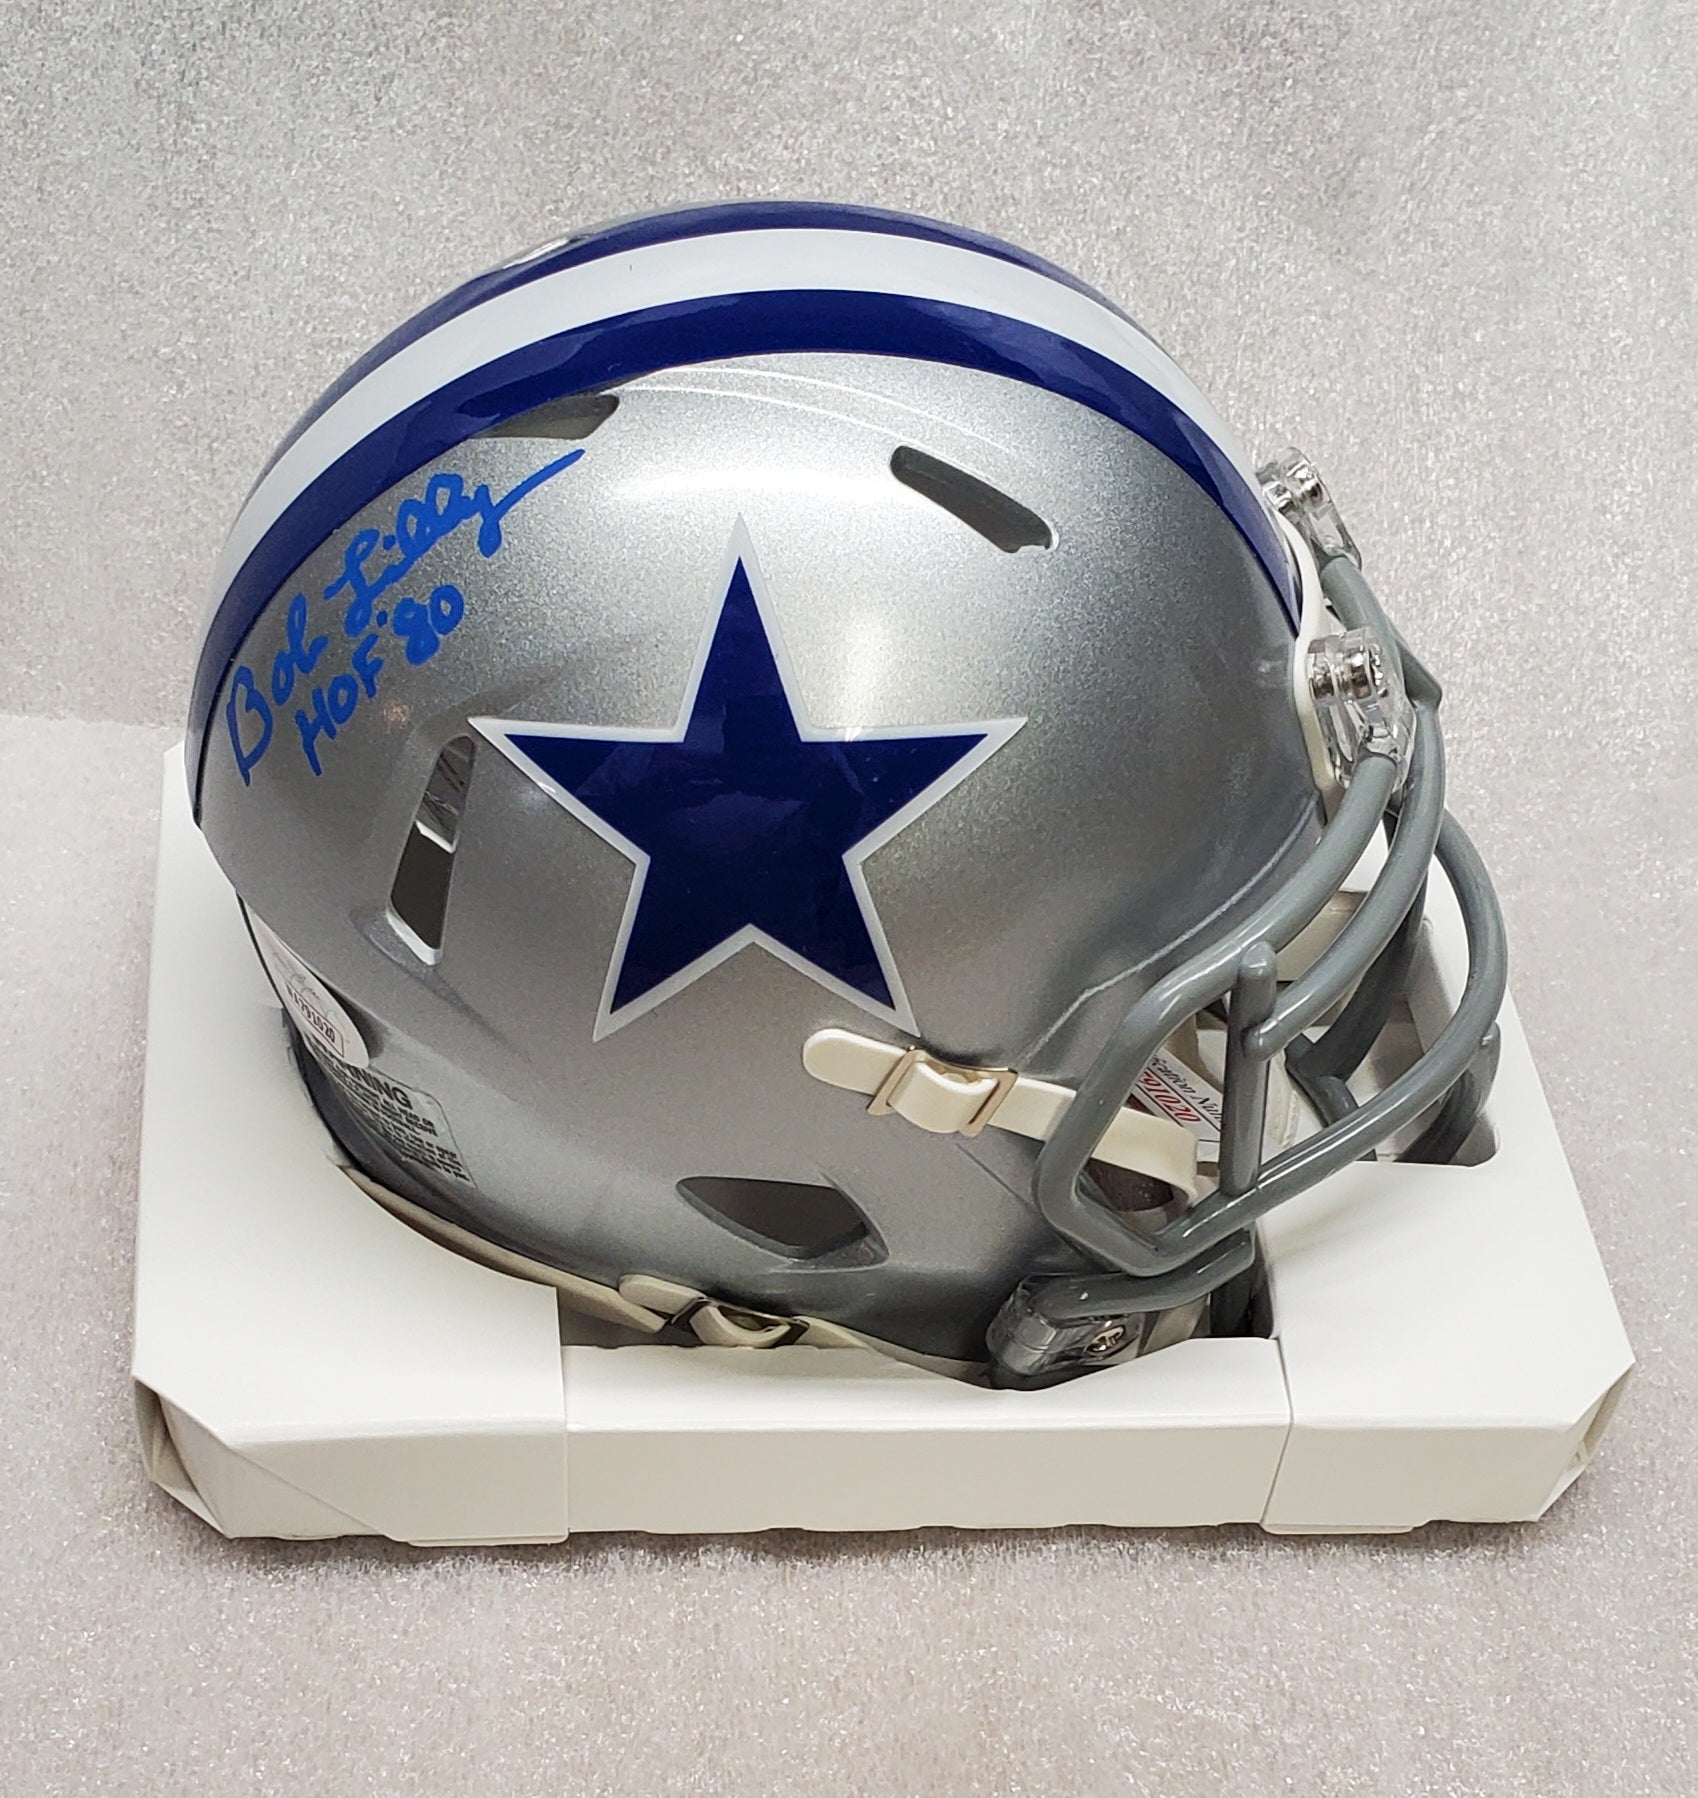 Dallas Cowboys Legend Bob Lilly Autographed Cowboys Mini Helmet With The 'HOF 80' Inscription. JSA Certified